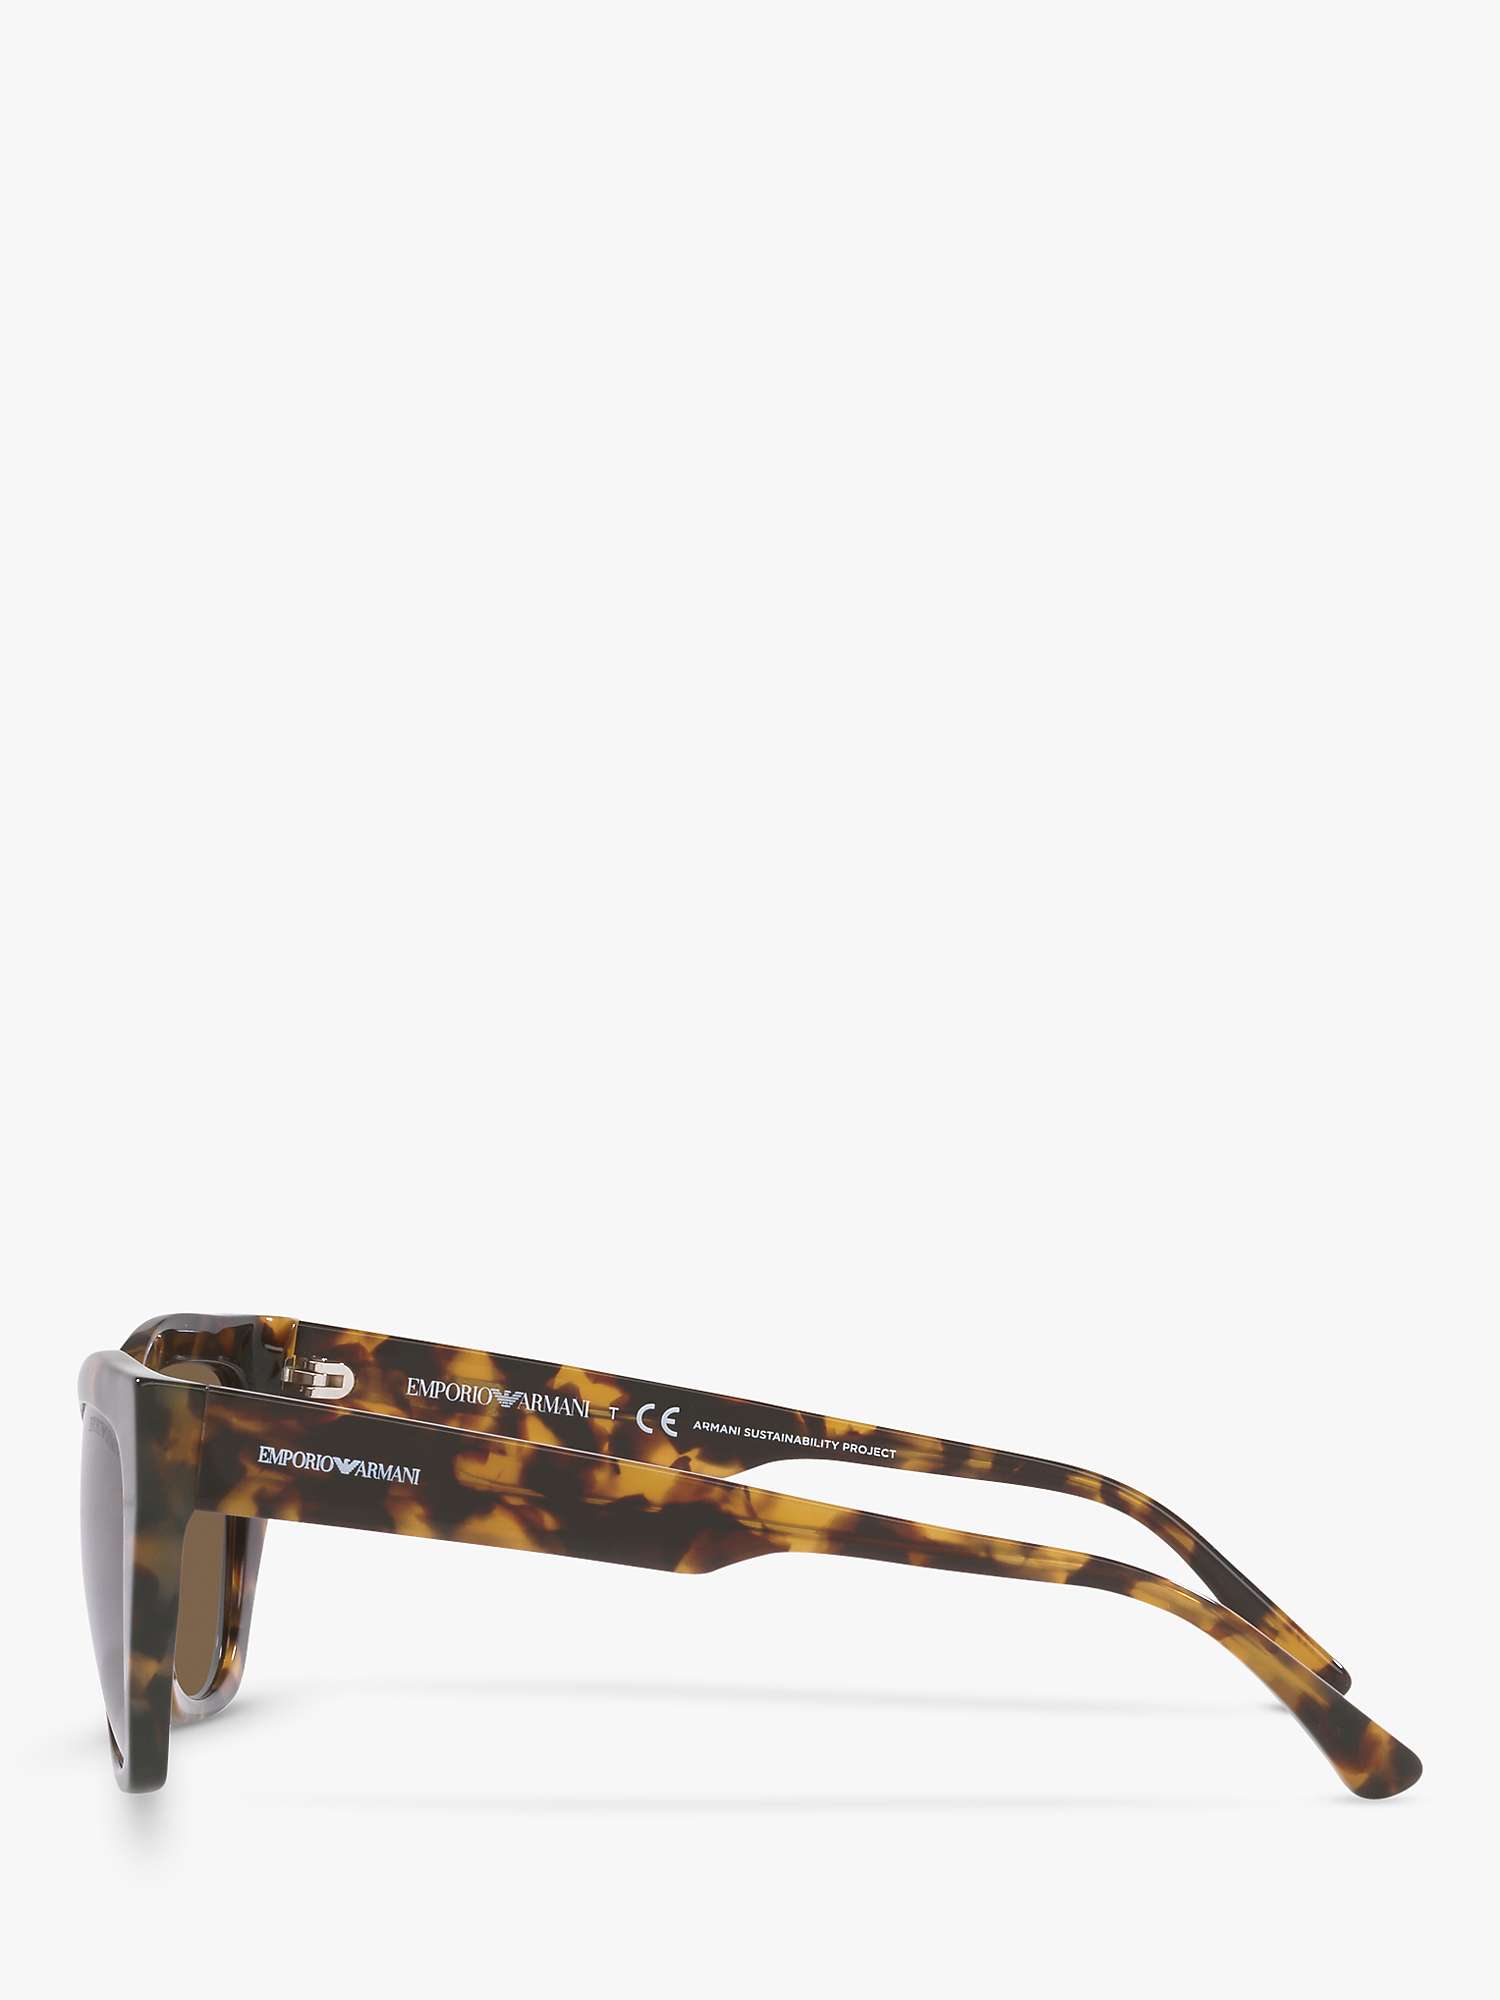 Buy Emporio Armani EA4176 Women's Cat's Eye Sunglasses Online at johnlewis.com